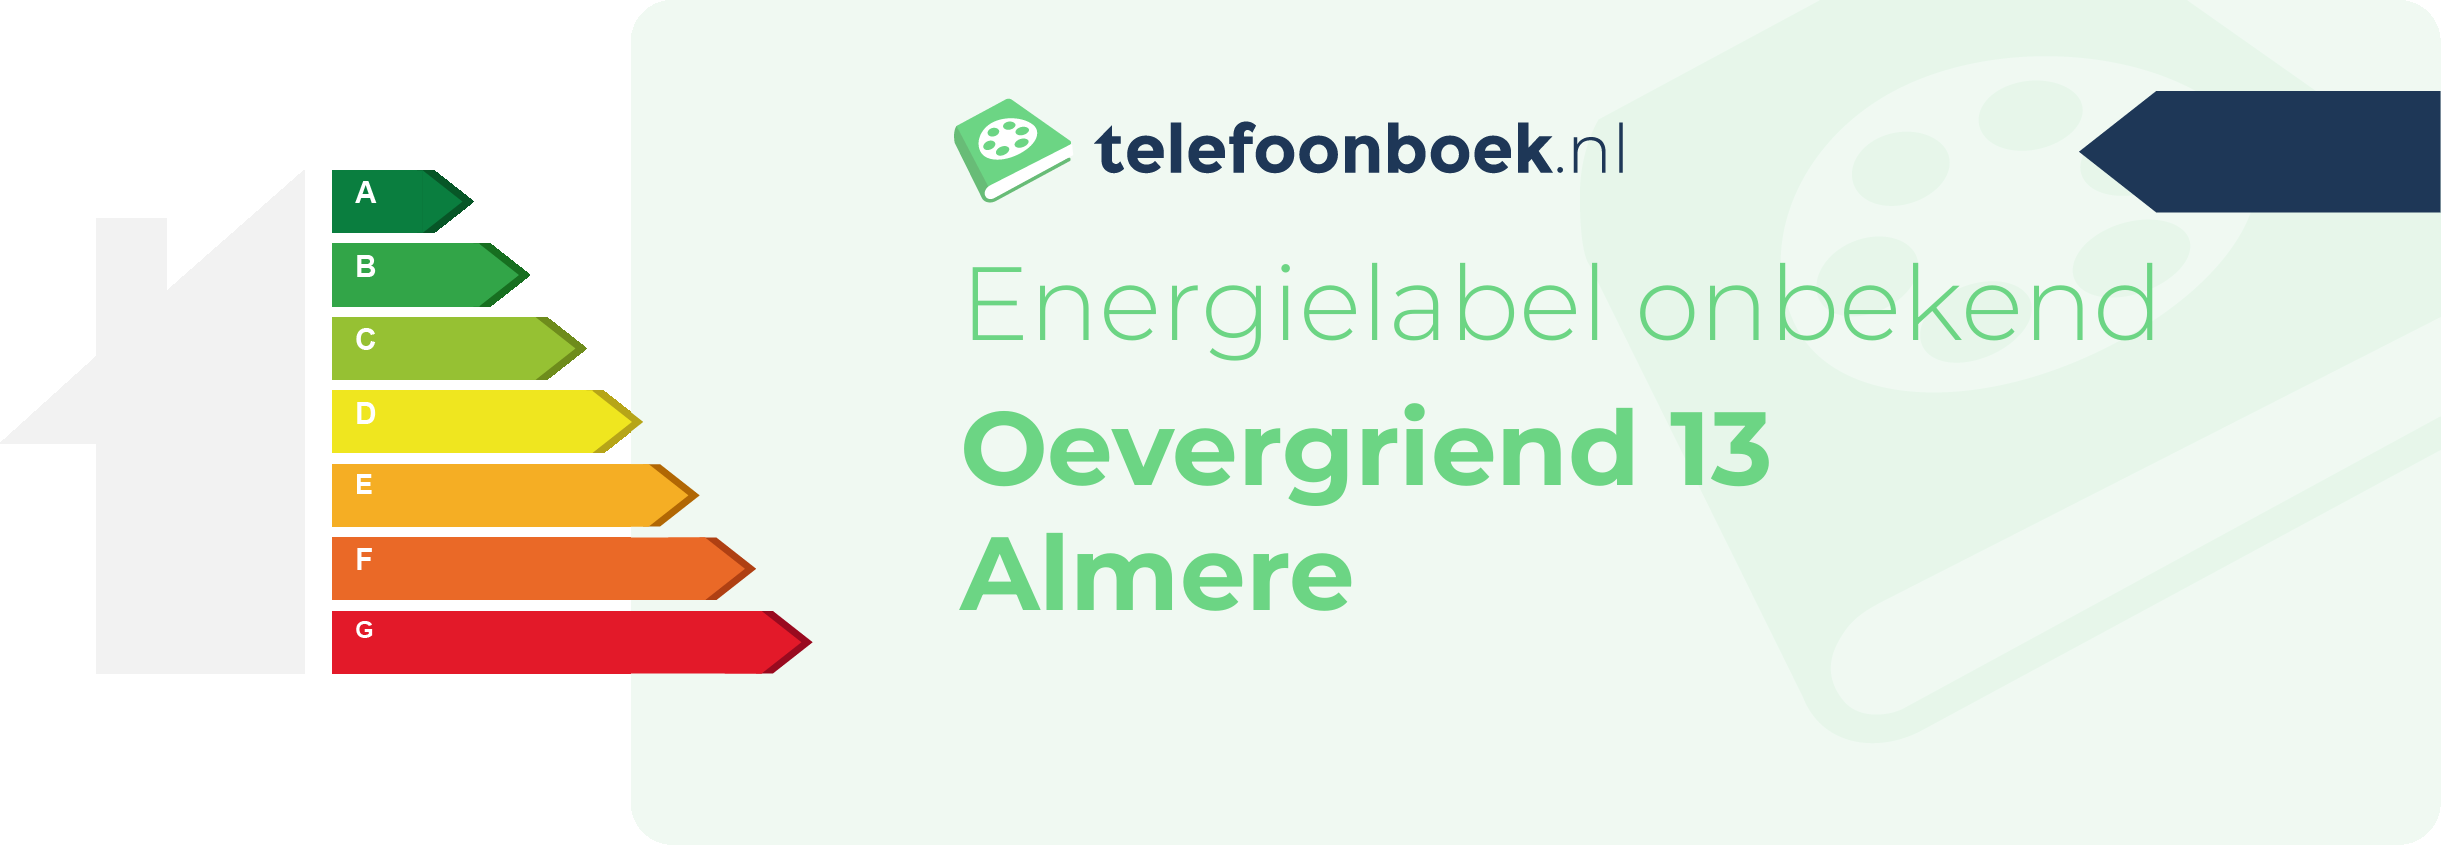 Energielabel Oevergriend 13 Almere